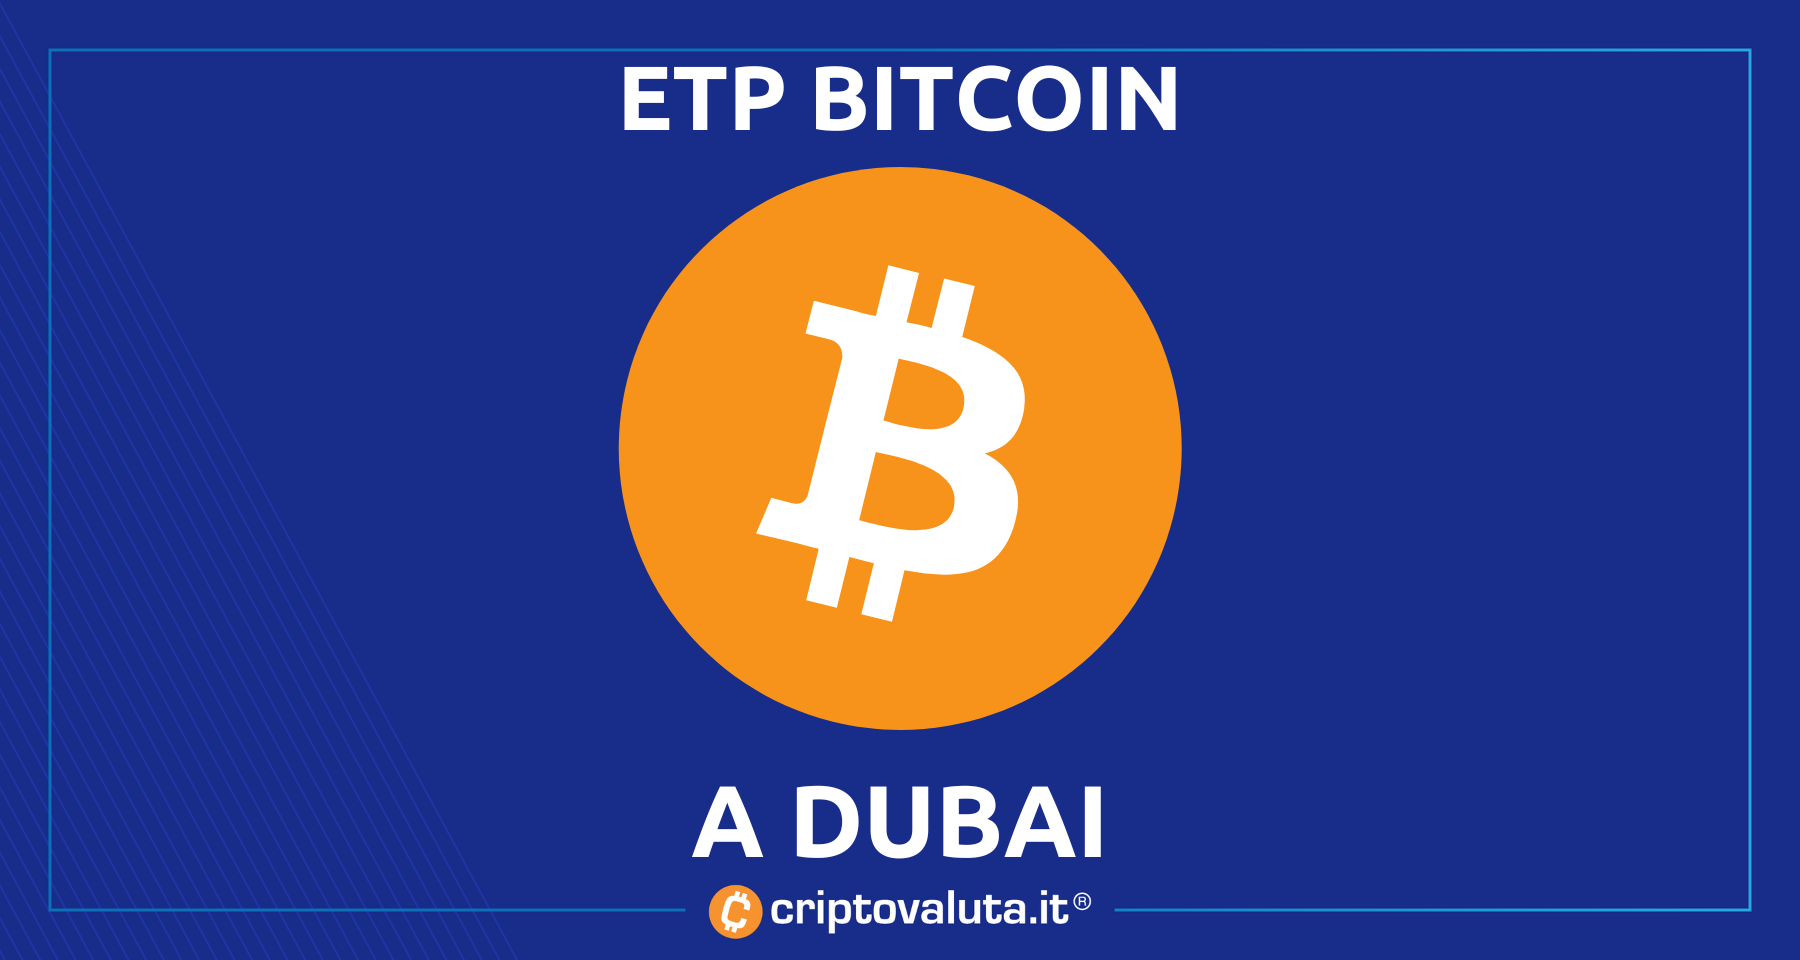 21Shares: ETP Bitcoin Spot a Dubai! | Svolta per BTC e per il gestore